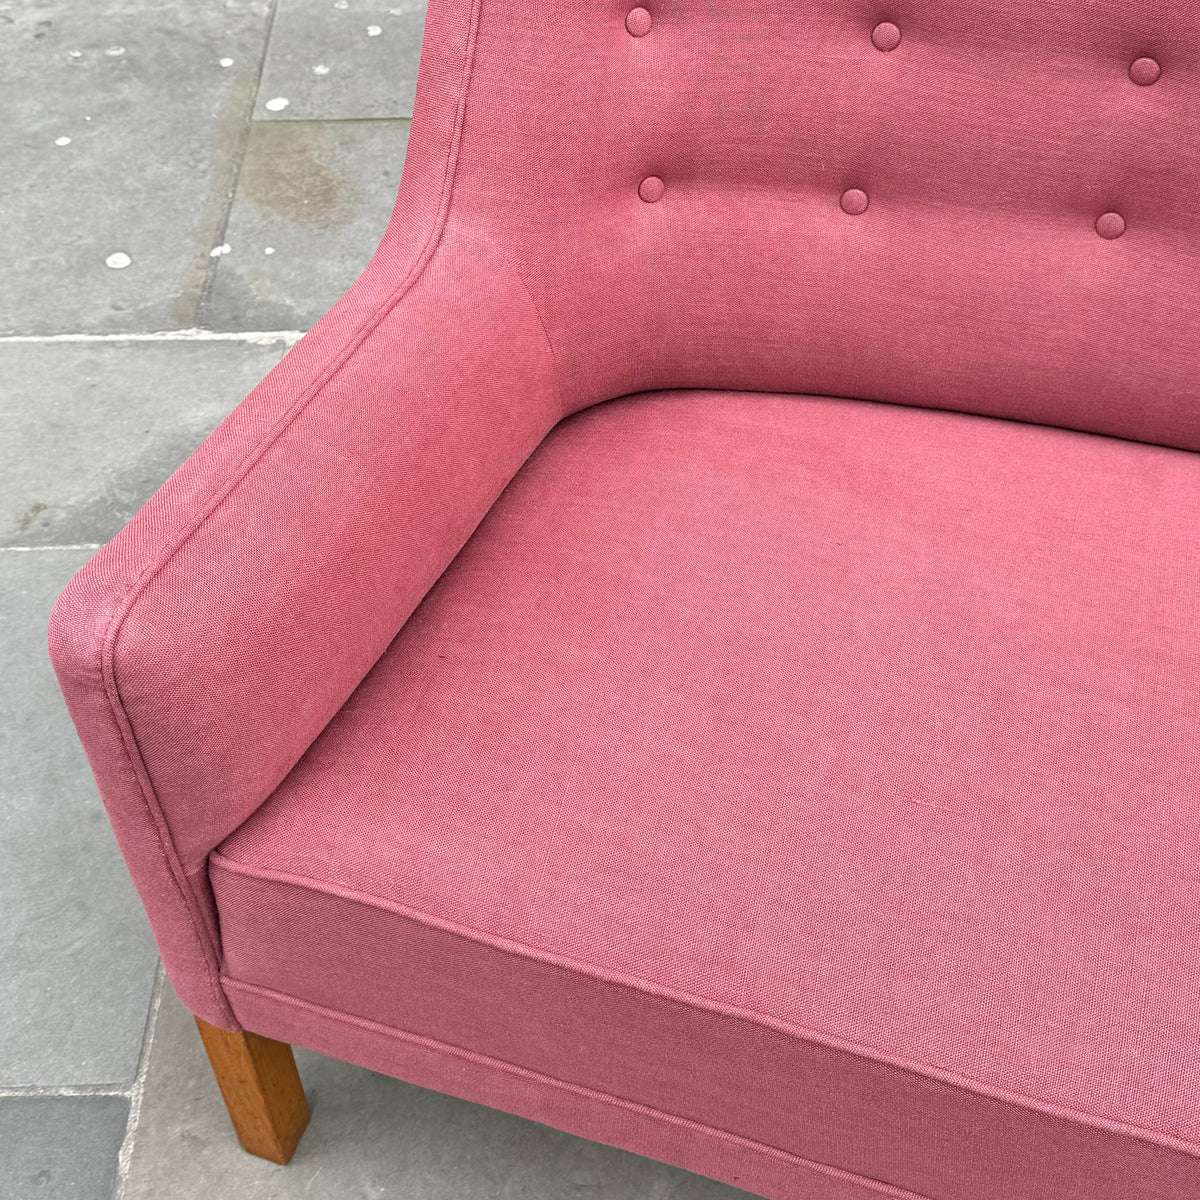 Soft-Pink Sofa/ Denmark, 1950s